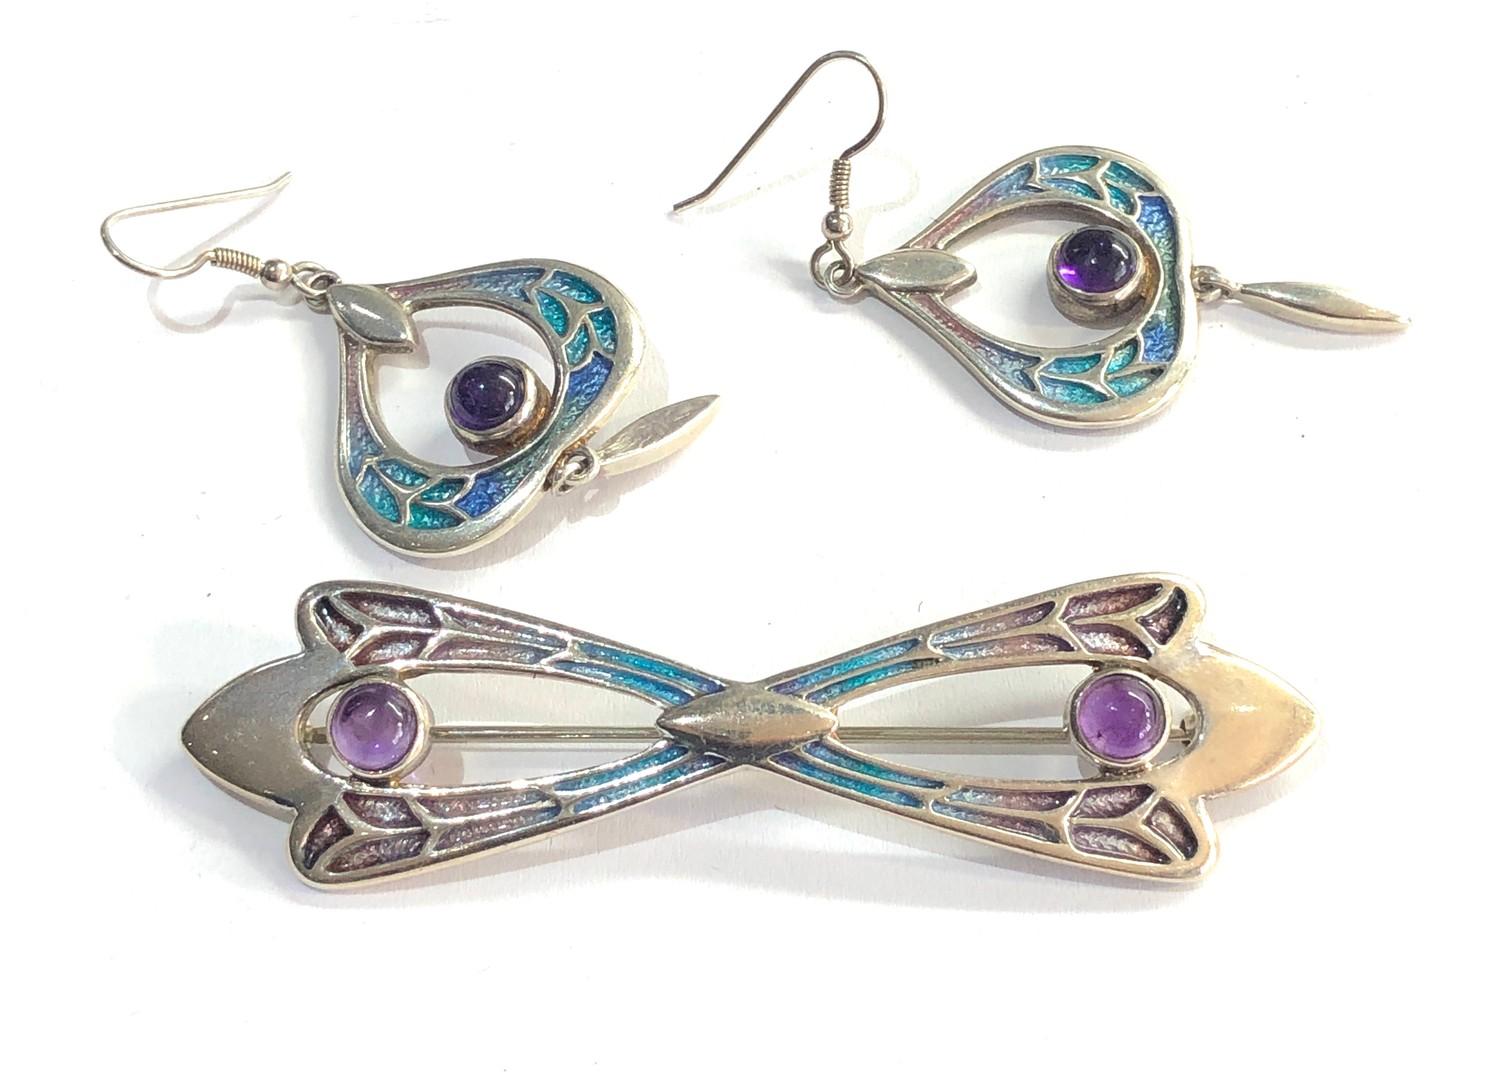 Silver and enamel amethyst set earrings and brooch